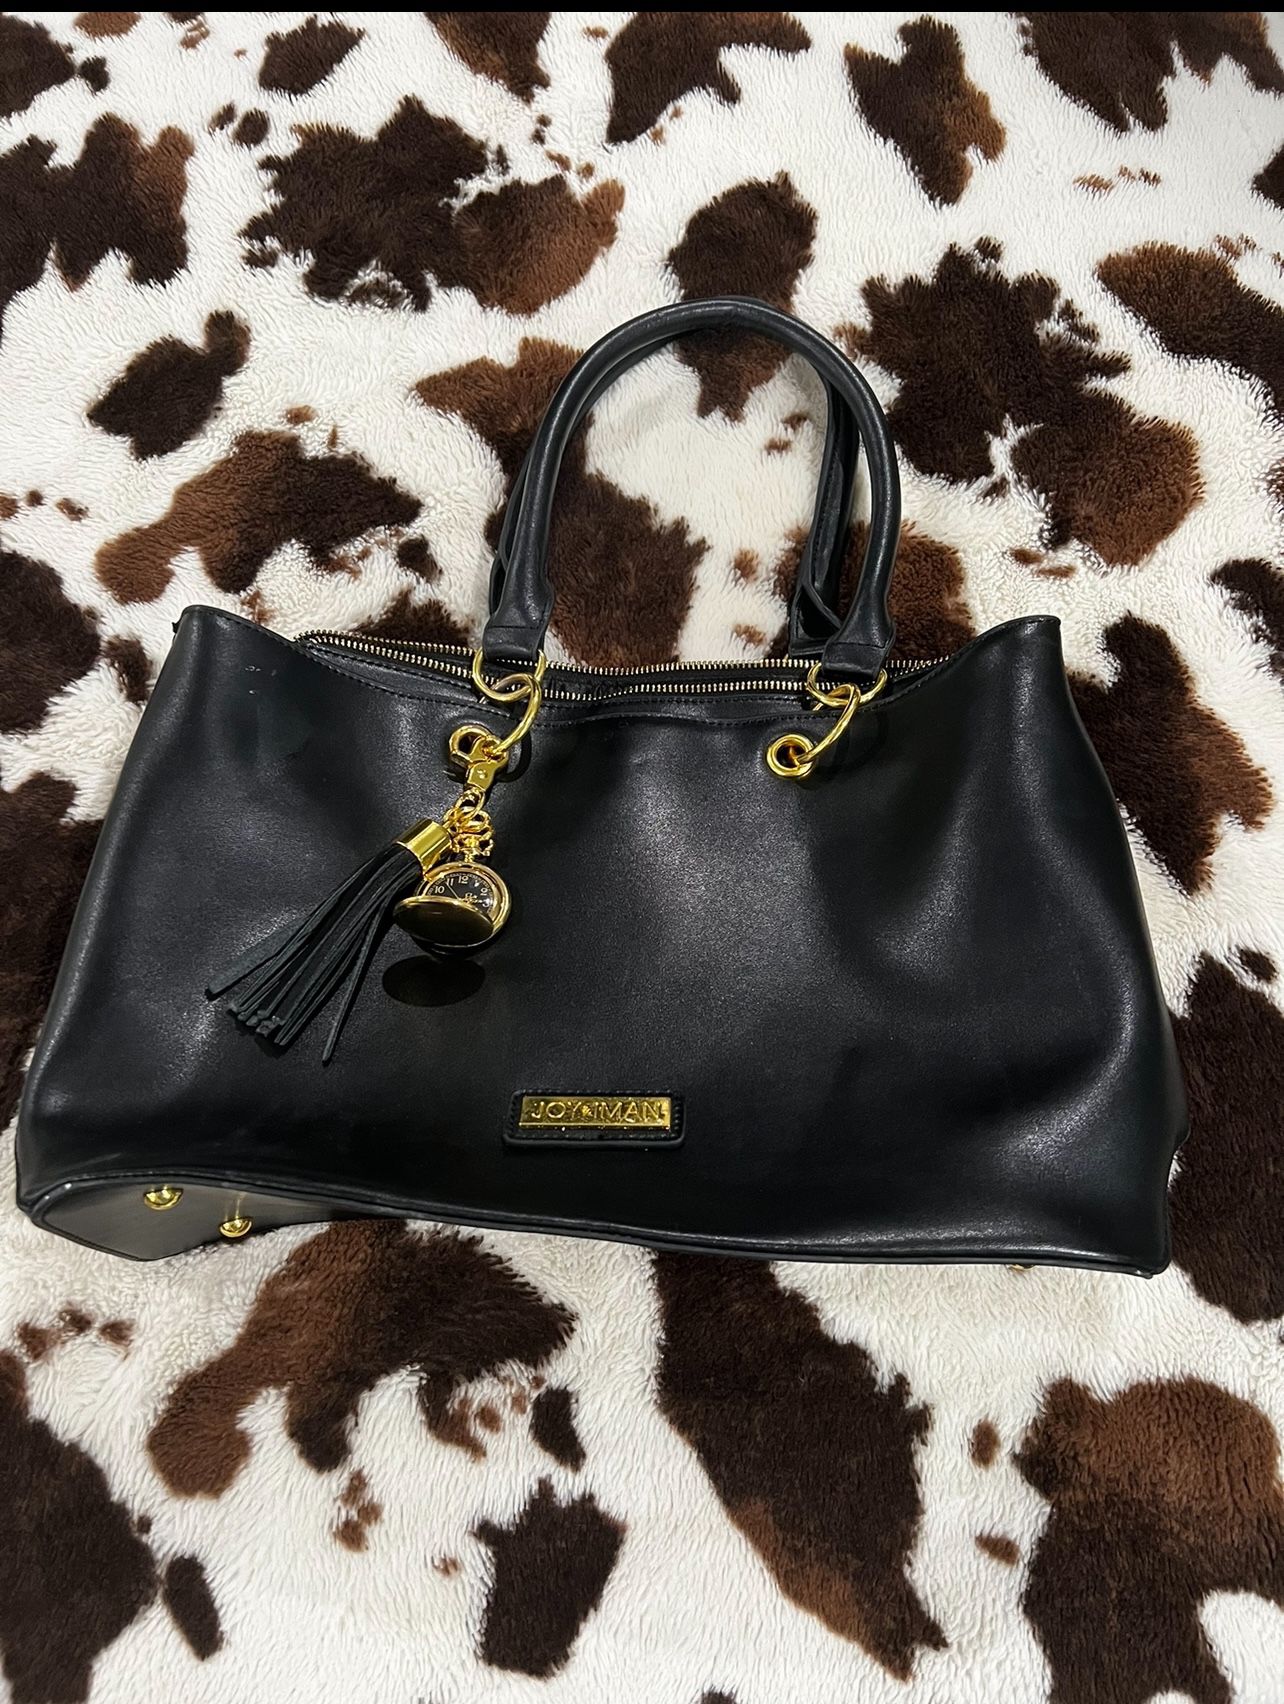 Joy Mangano black purse with pocket watch 